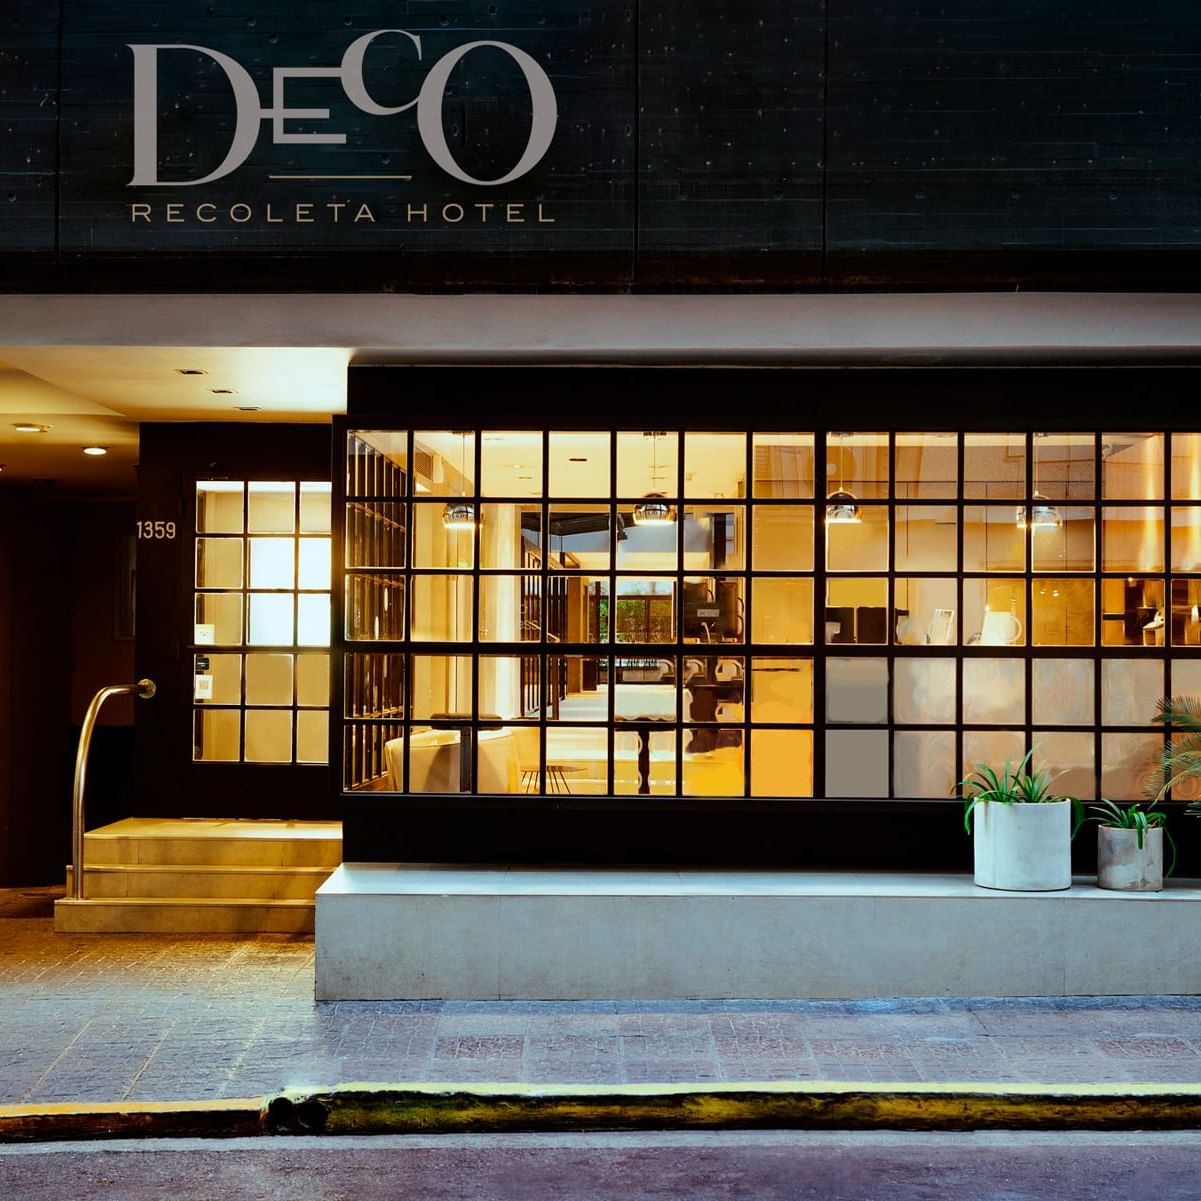 A Front Exterior view of Deco Recoleta Hotel